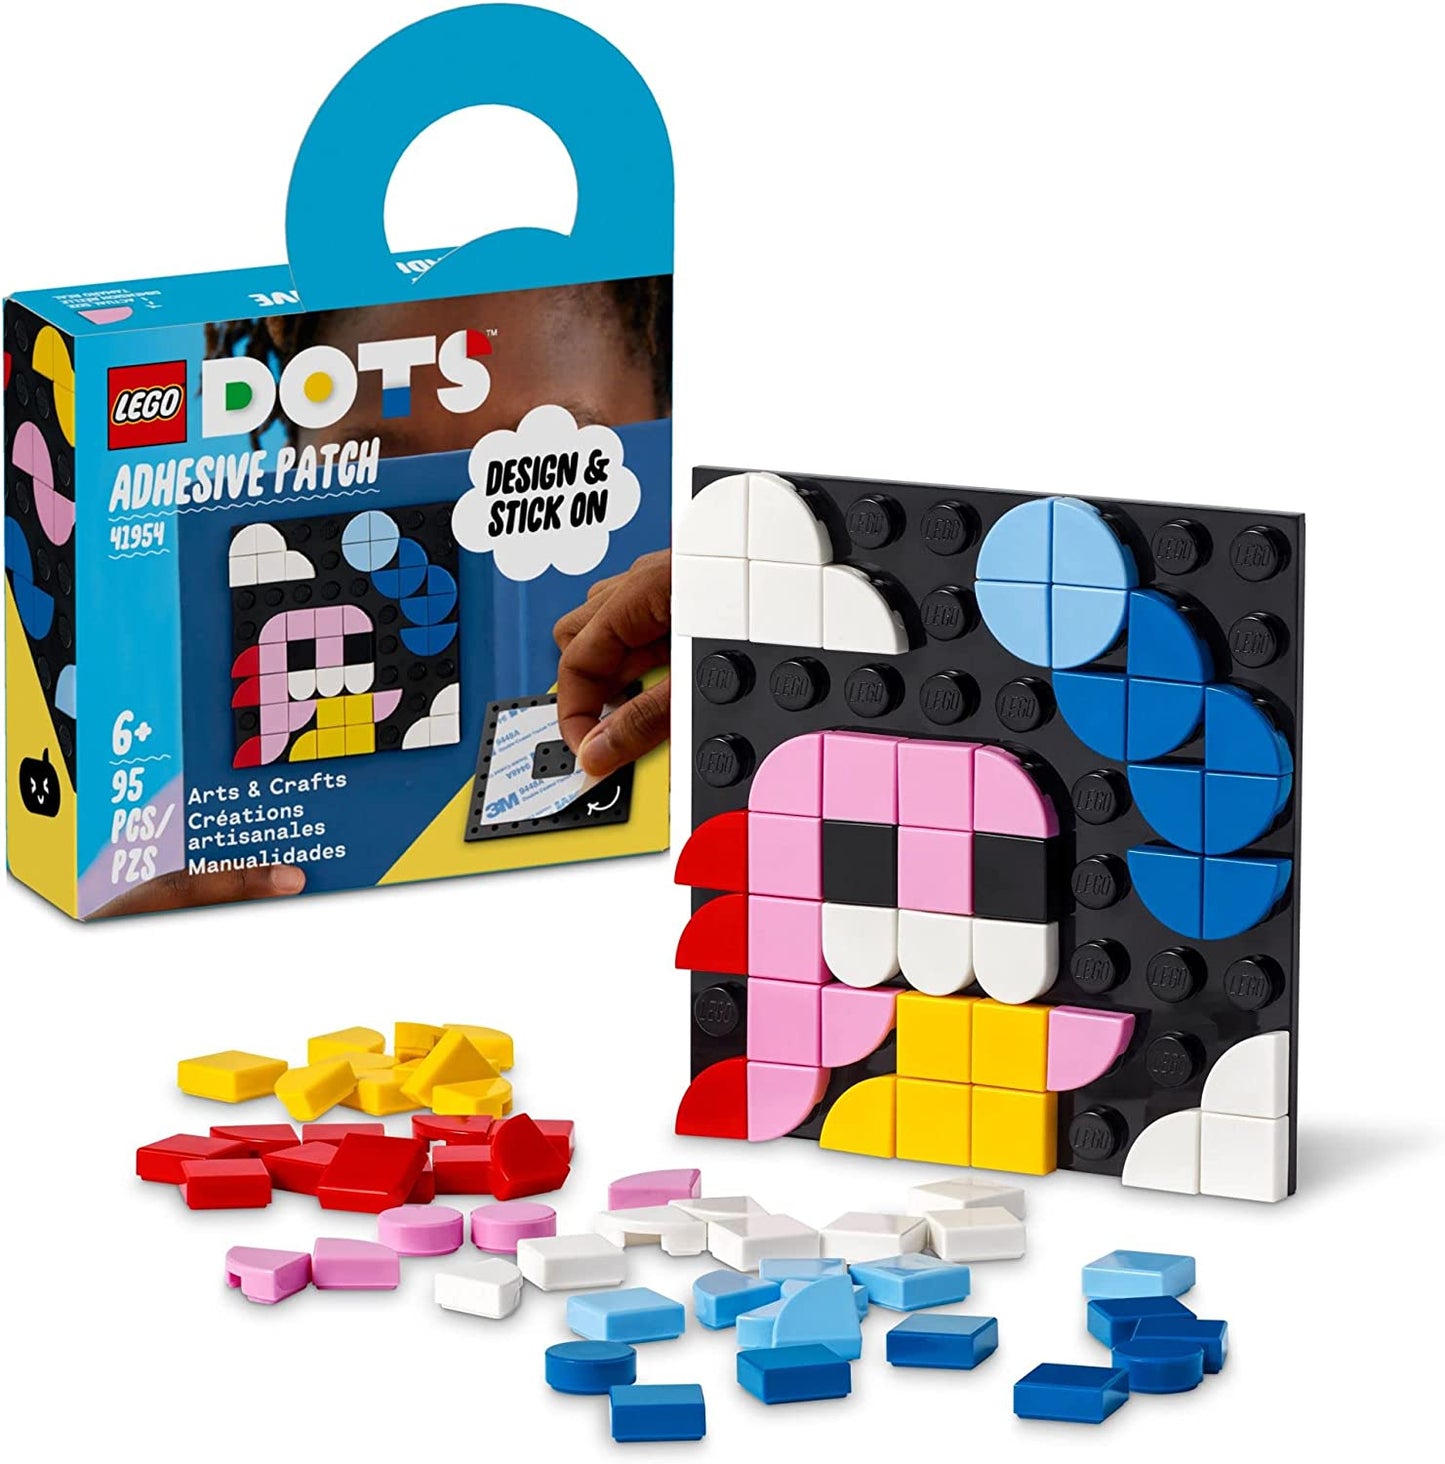 LEGO DOTS - Design & Stick On